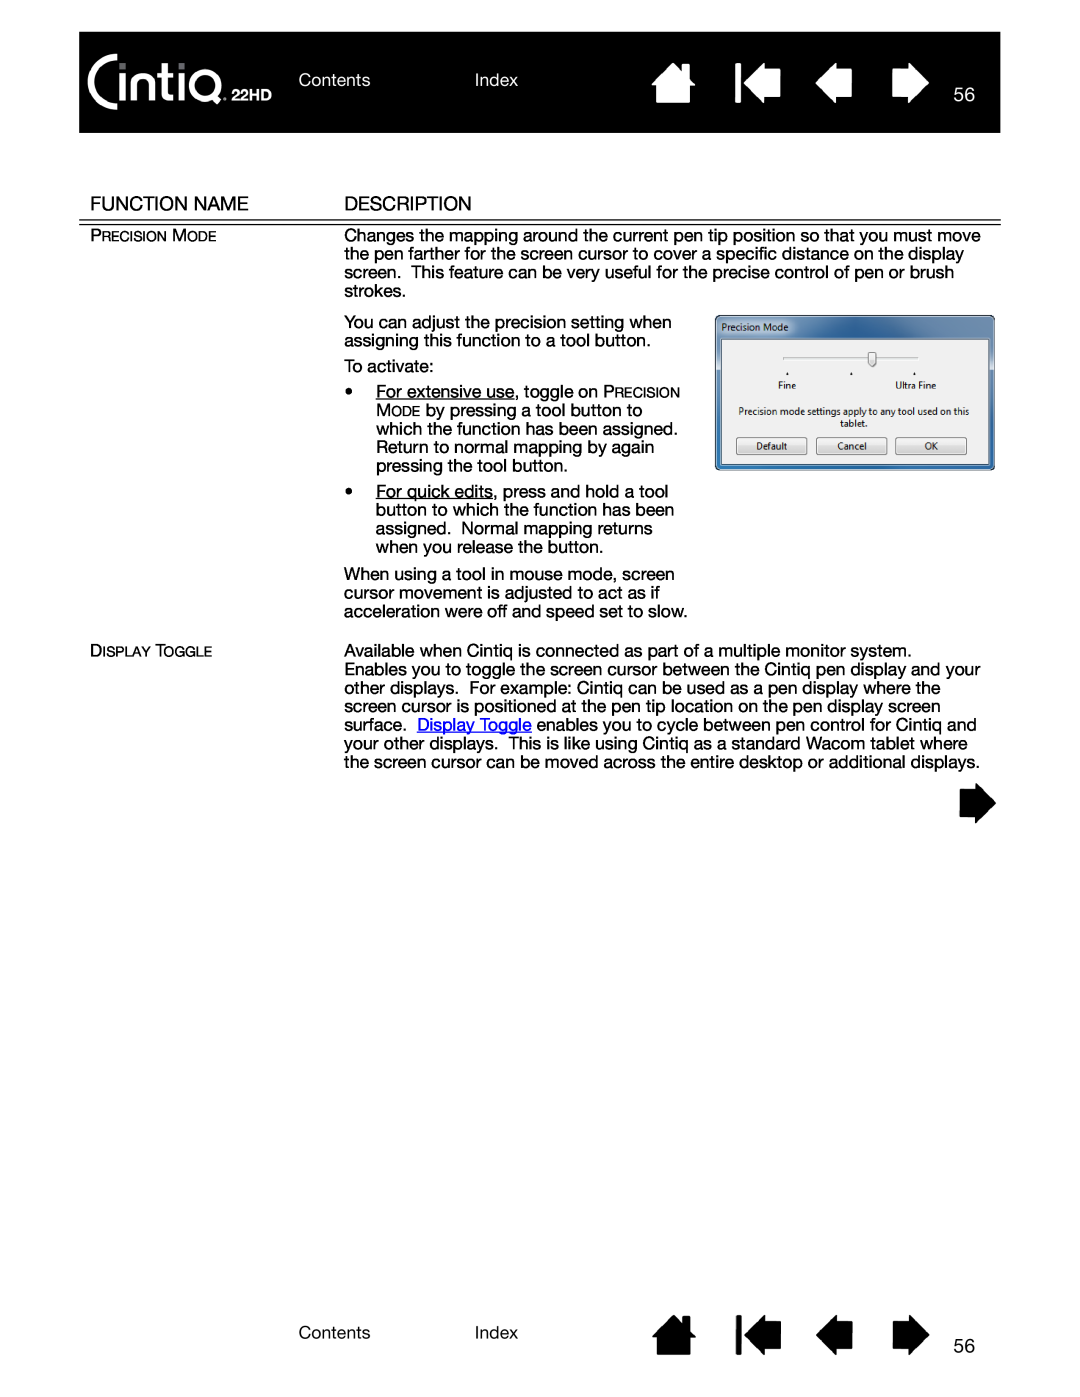 Wacom DTK-2200 user manual Function Name, Description, ContentsIndex, Precision Mode, Display Toggle 